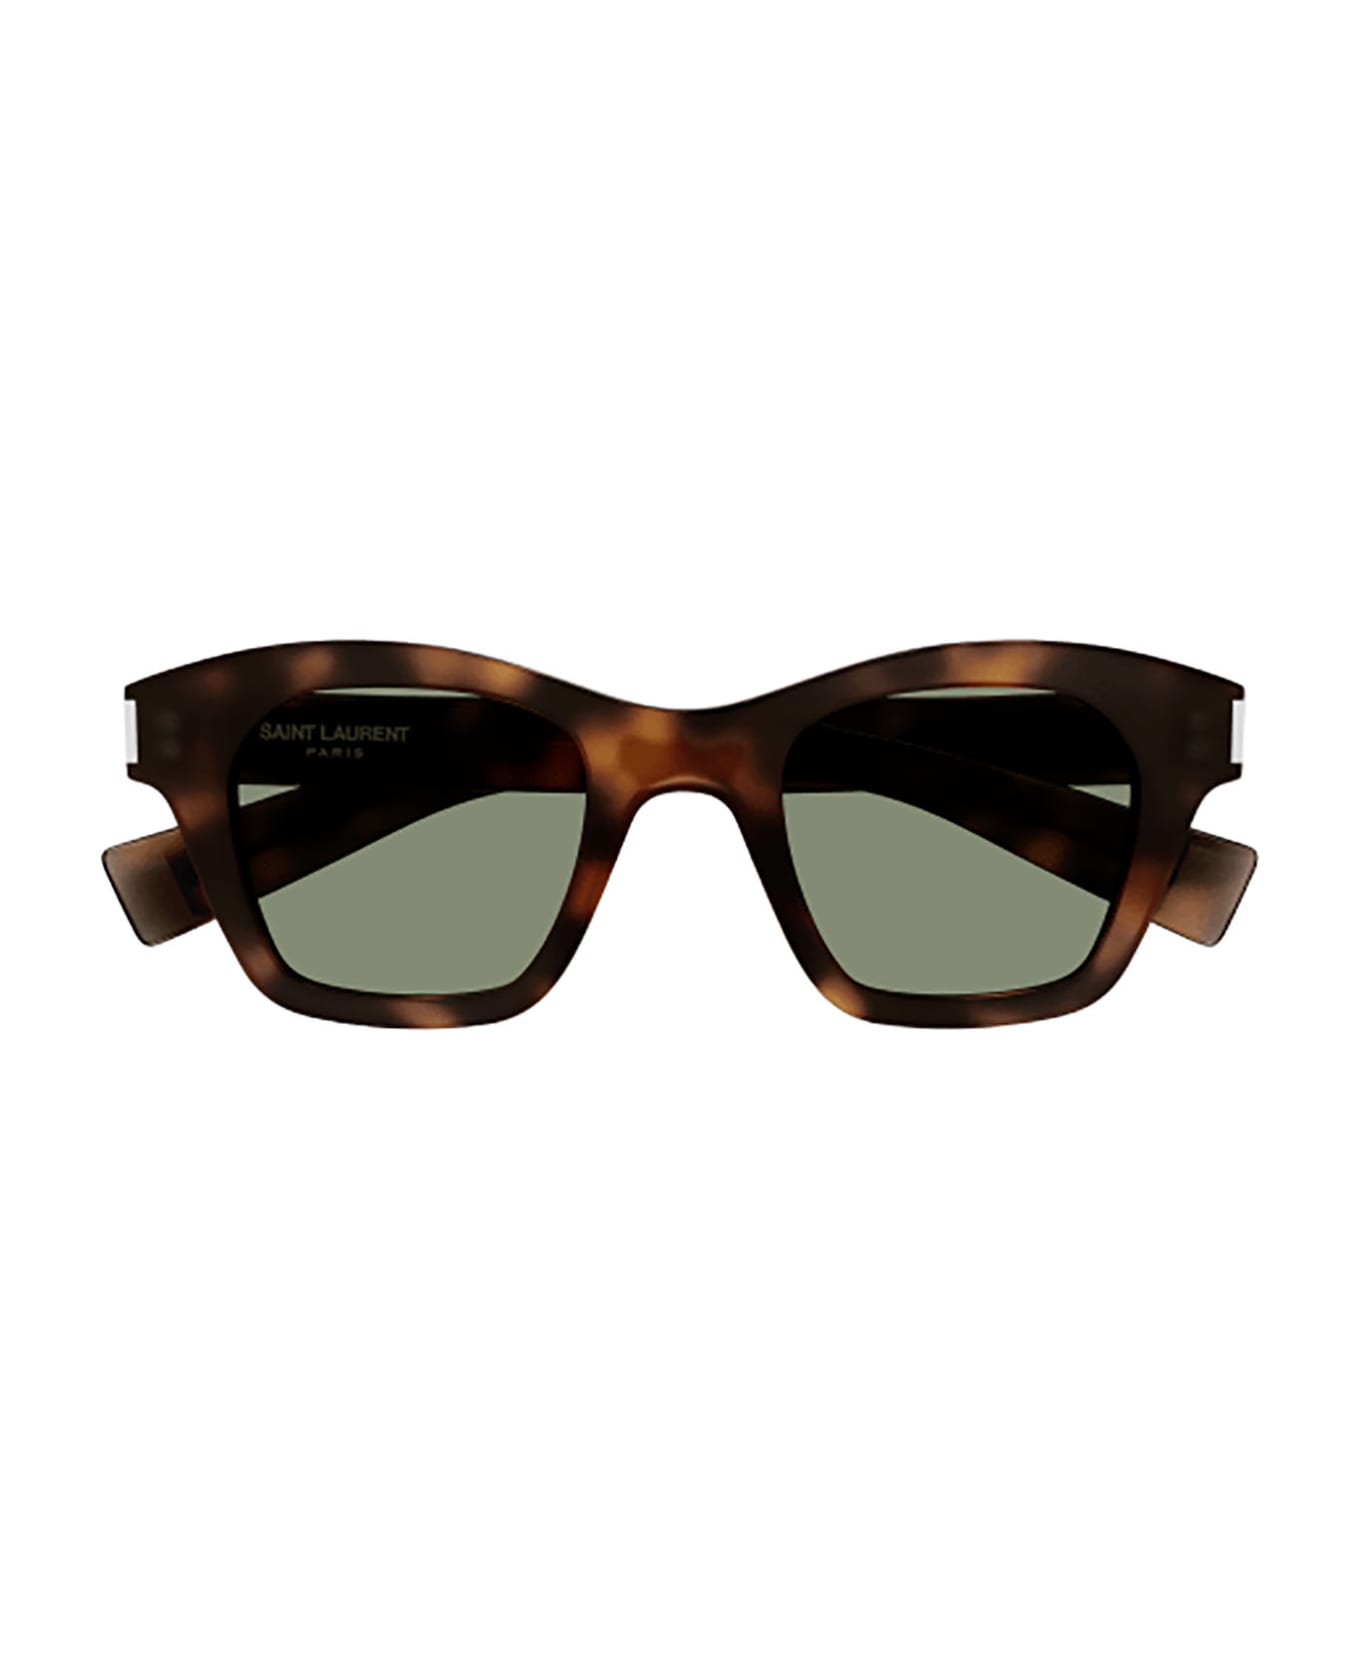 Saint Laurent Eyewear Sl 592 Sunglasses - 003 havana havana green